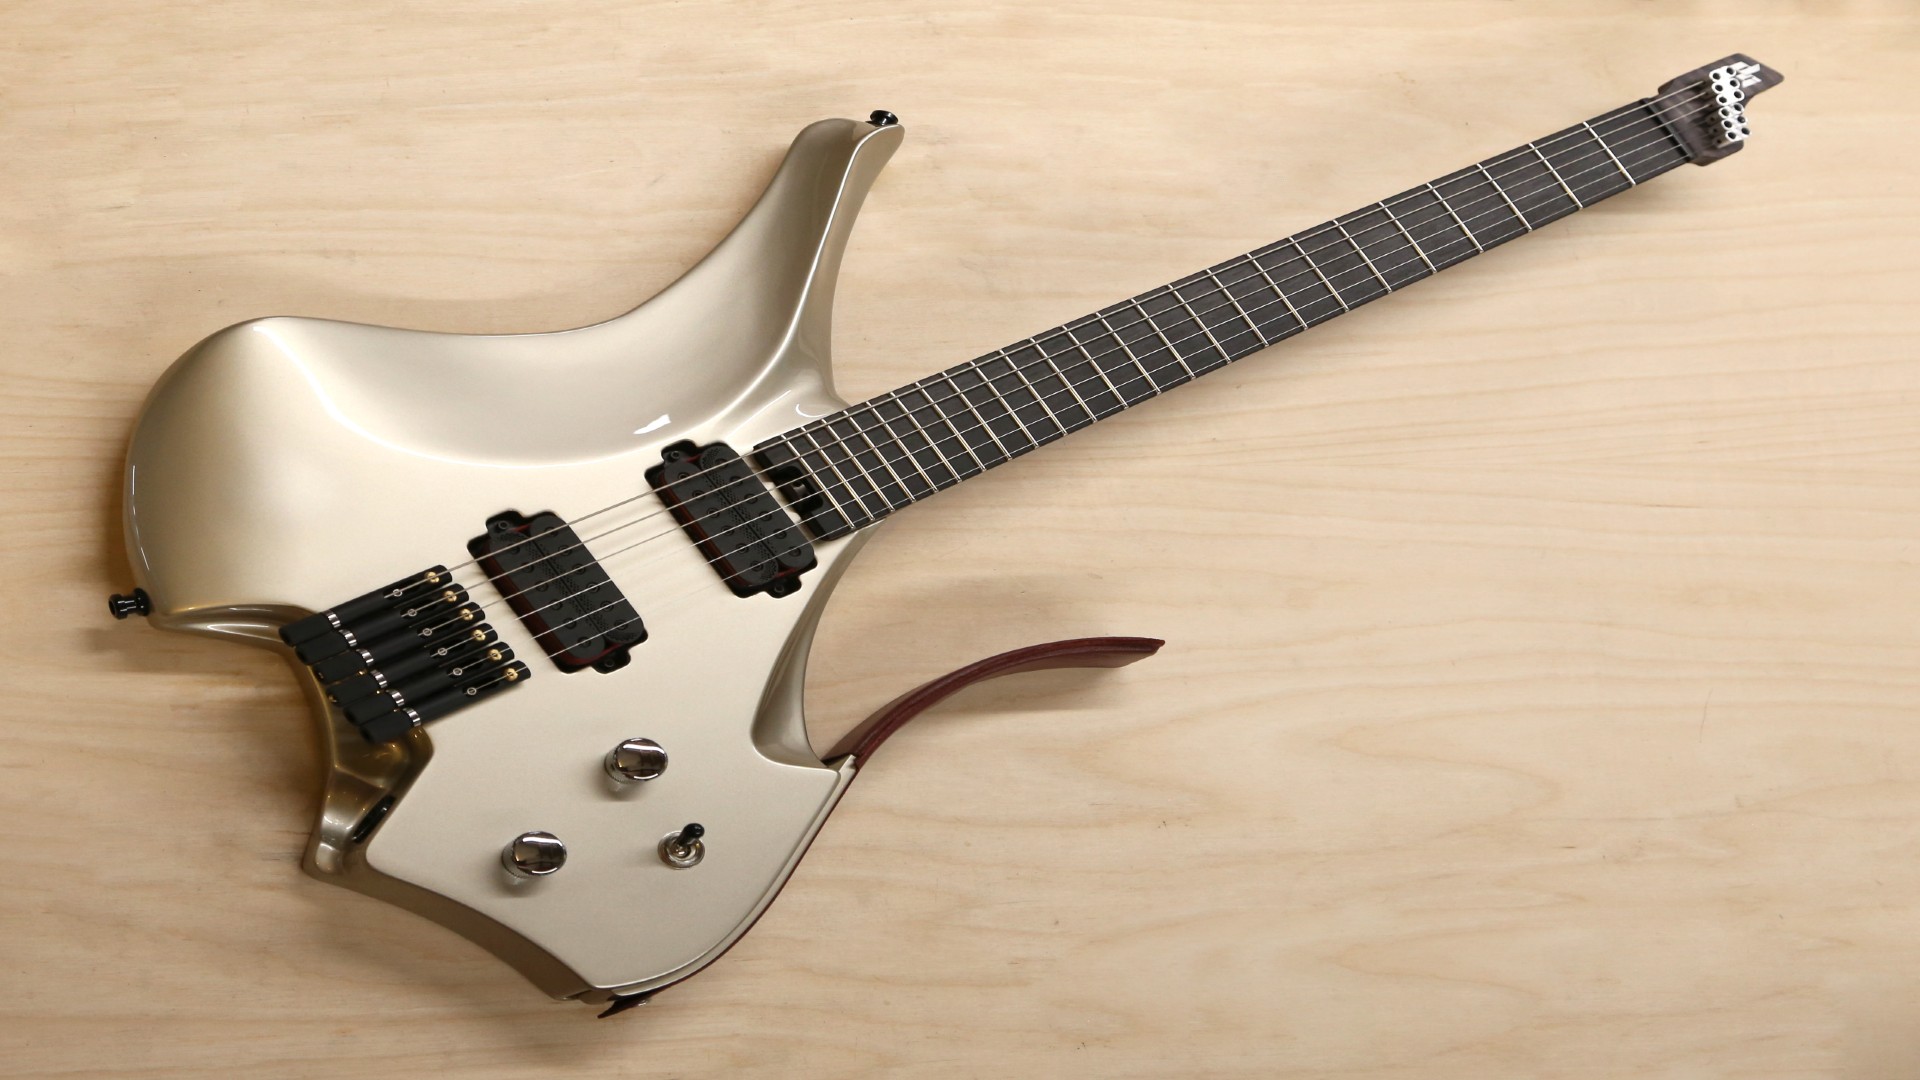 mclaren s speedtail hypercar inspired this xp2 custom built one off guitar 221925 1